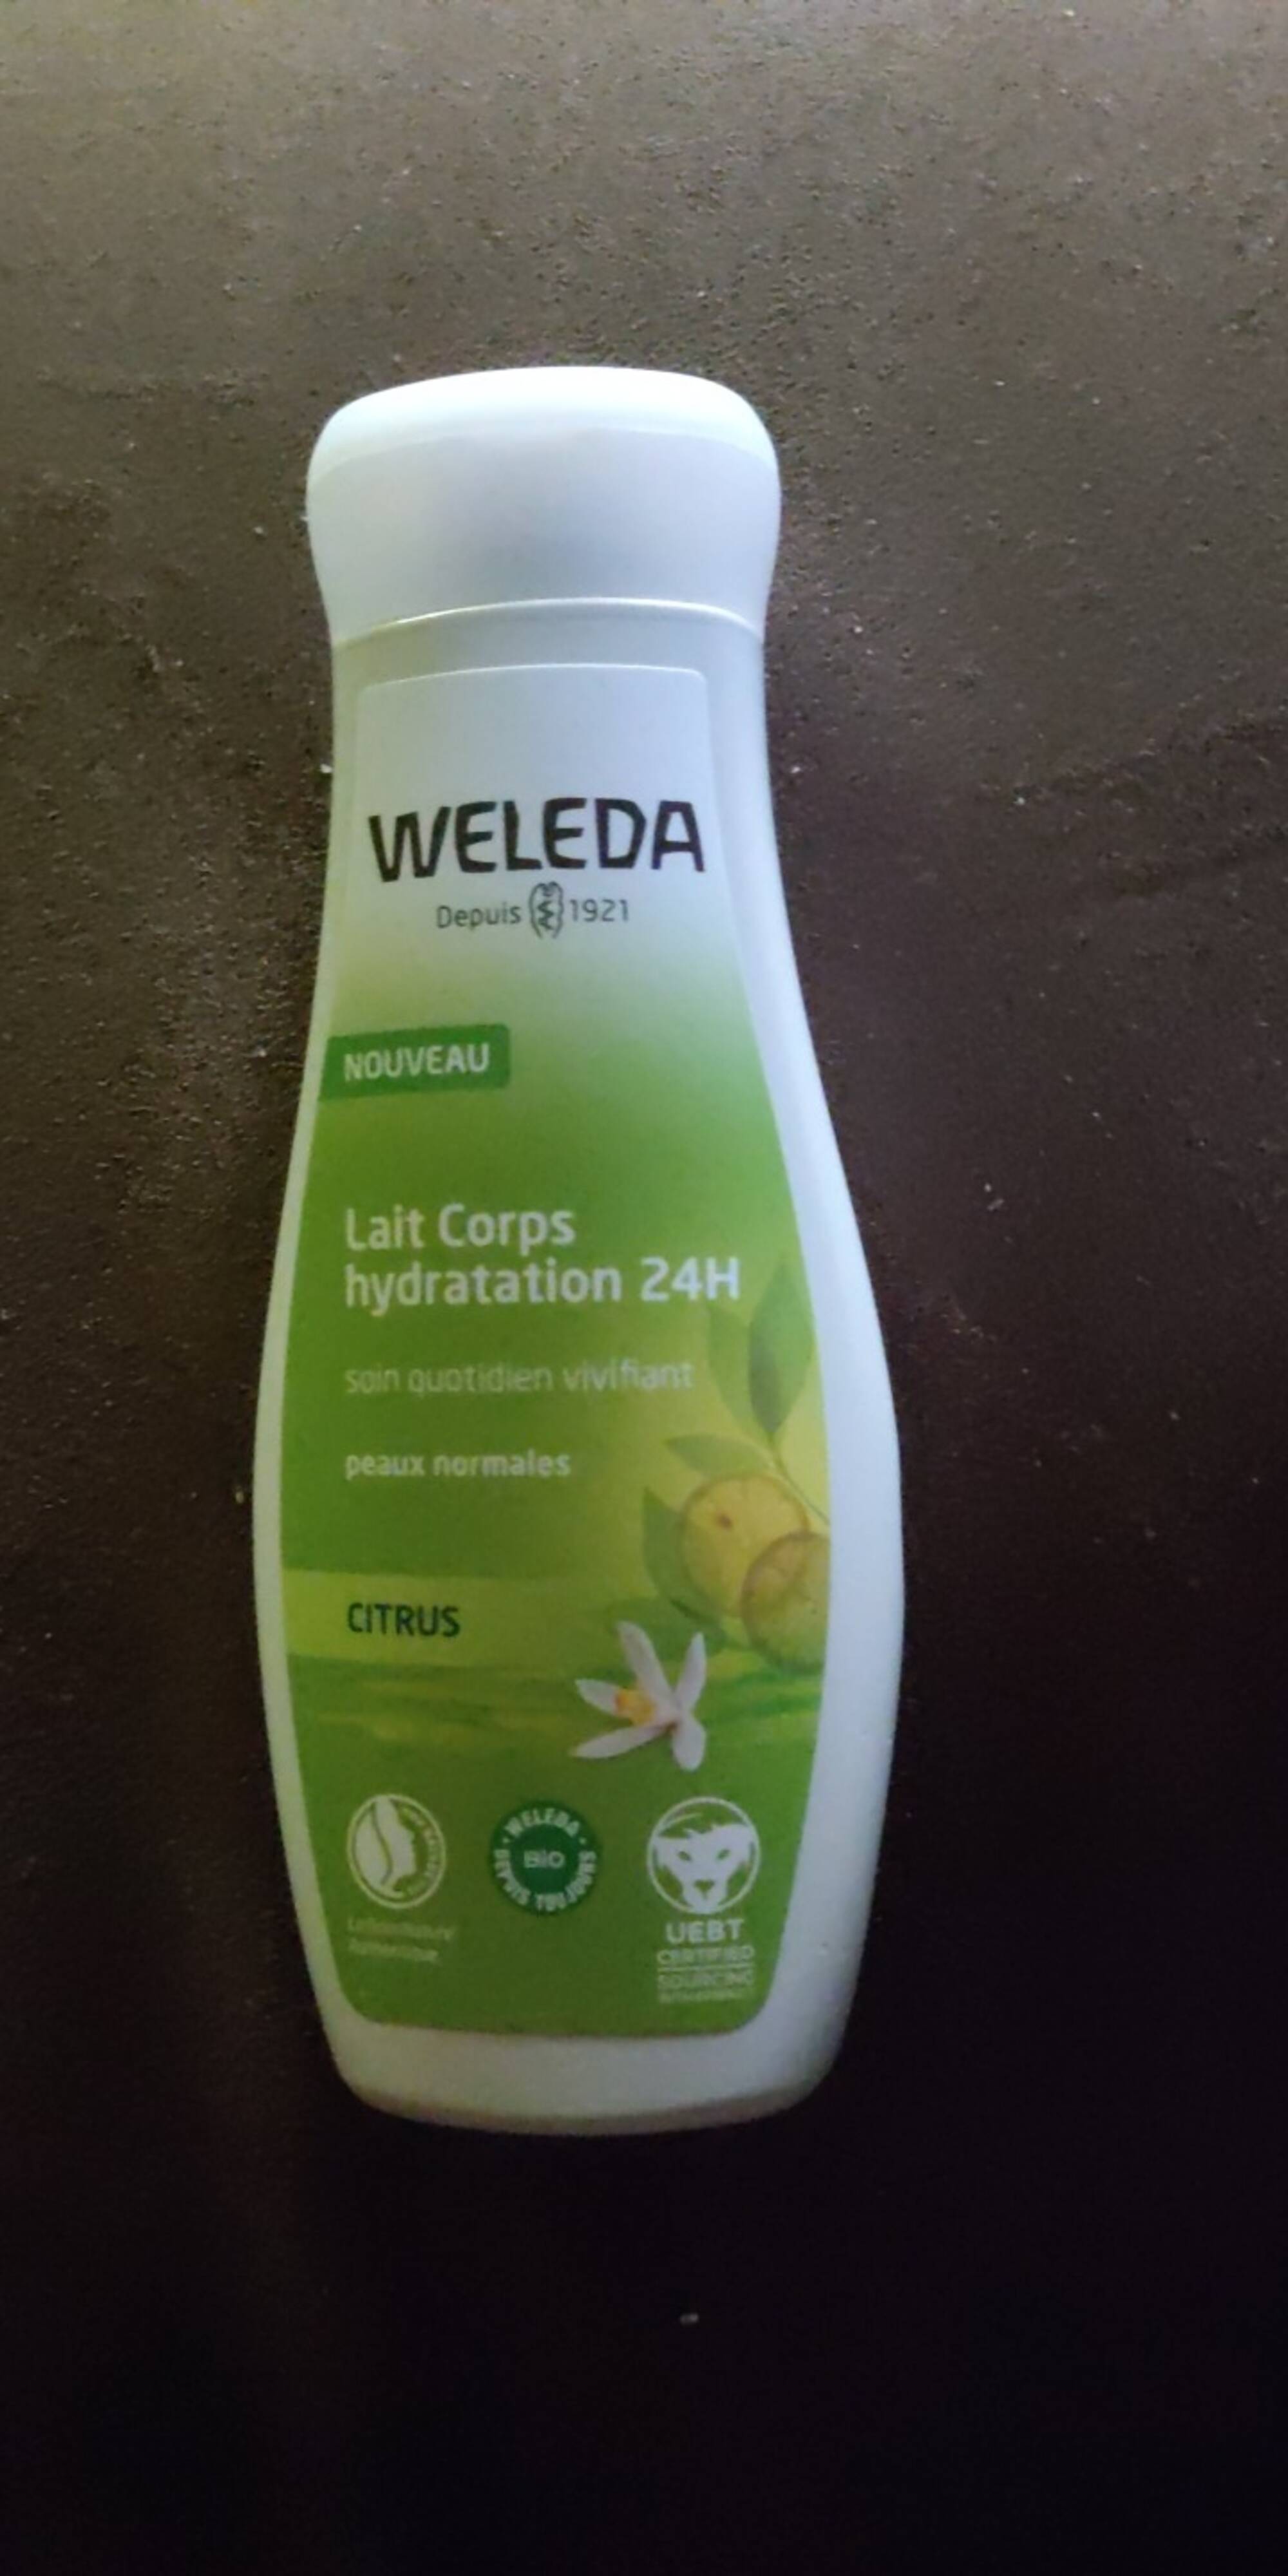 WELEDA - Citrus - Lait corps hydratation 24h